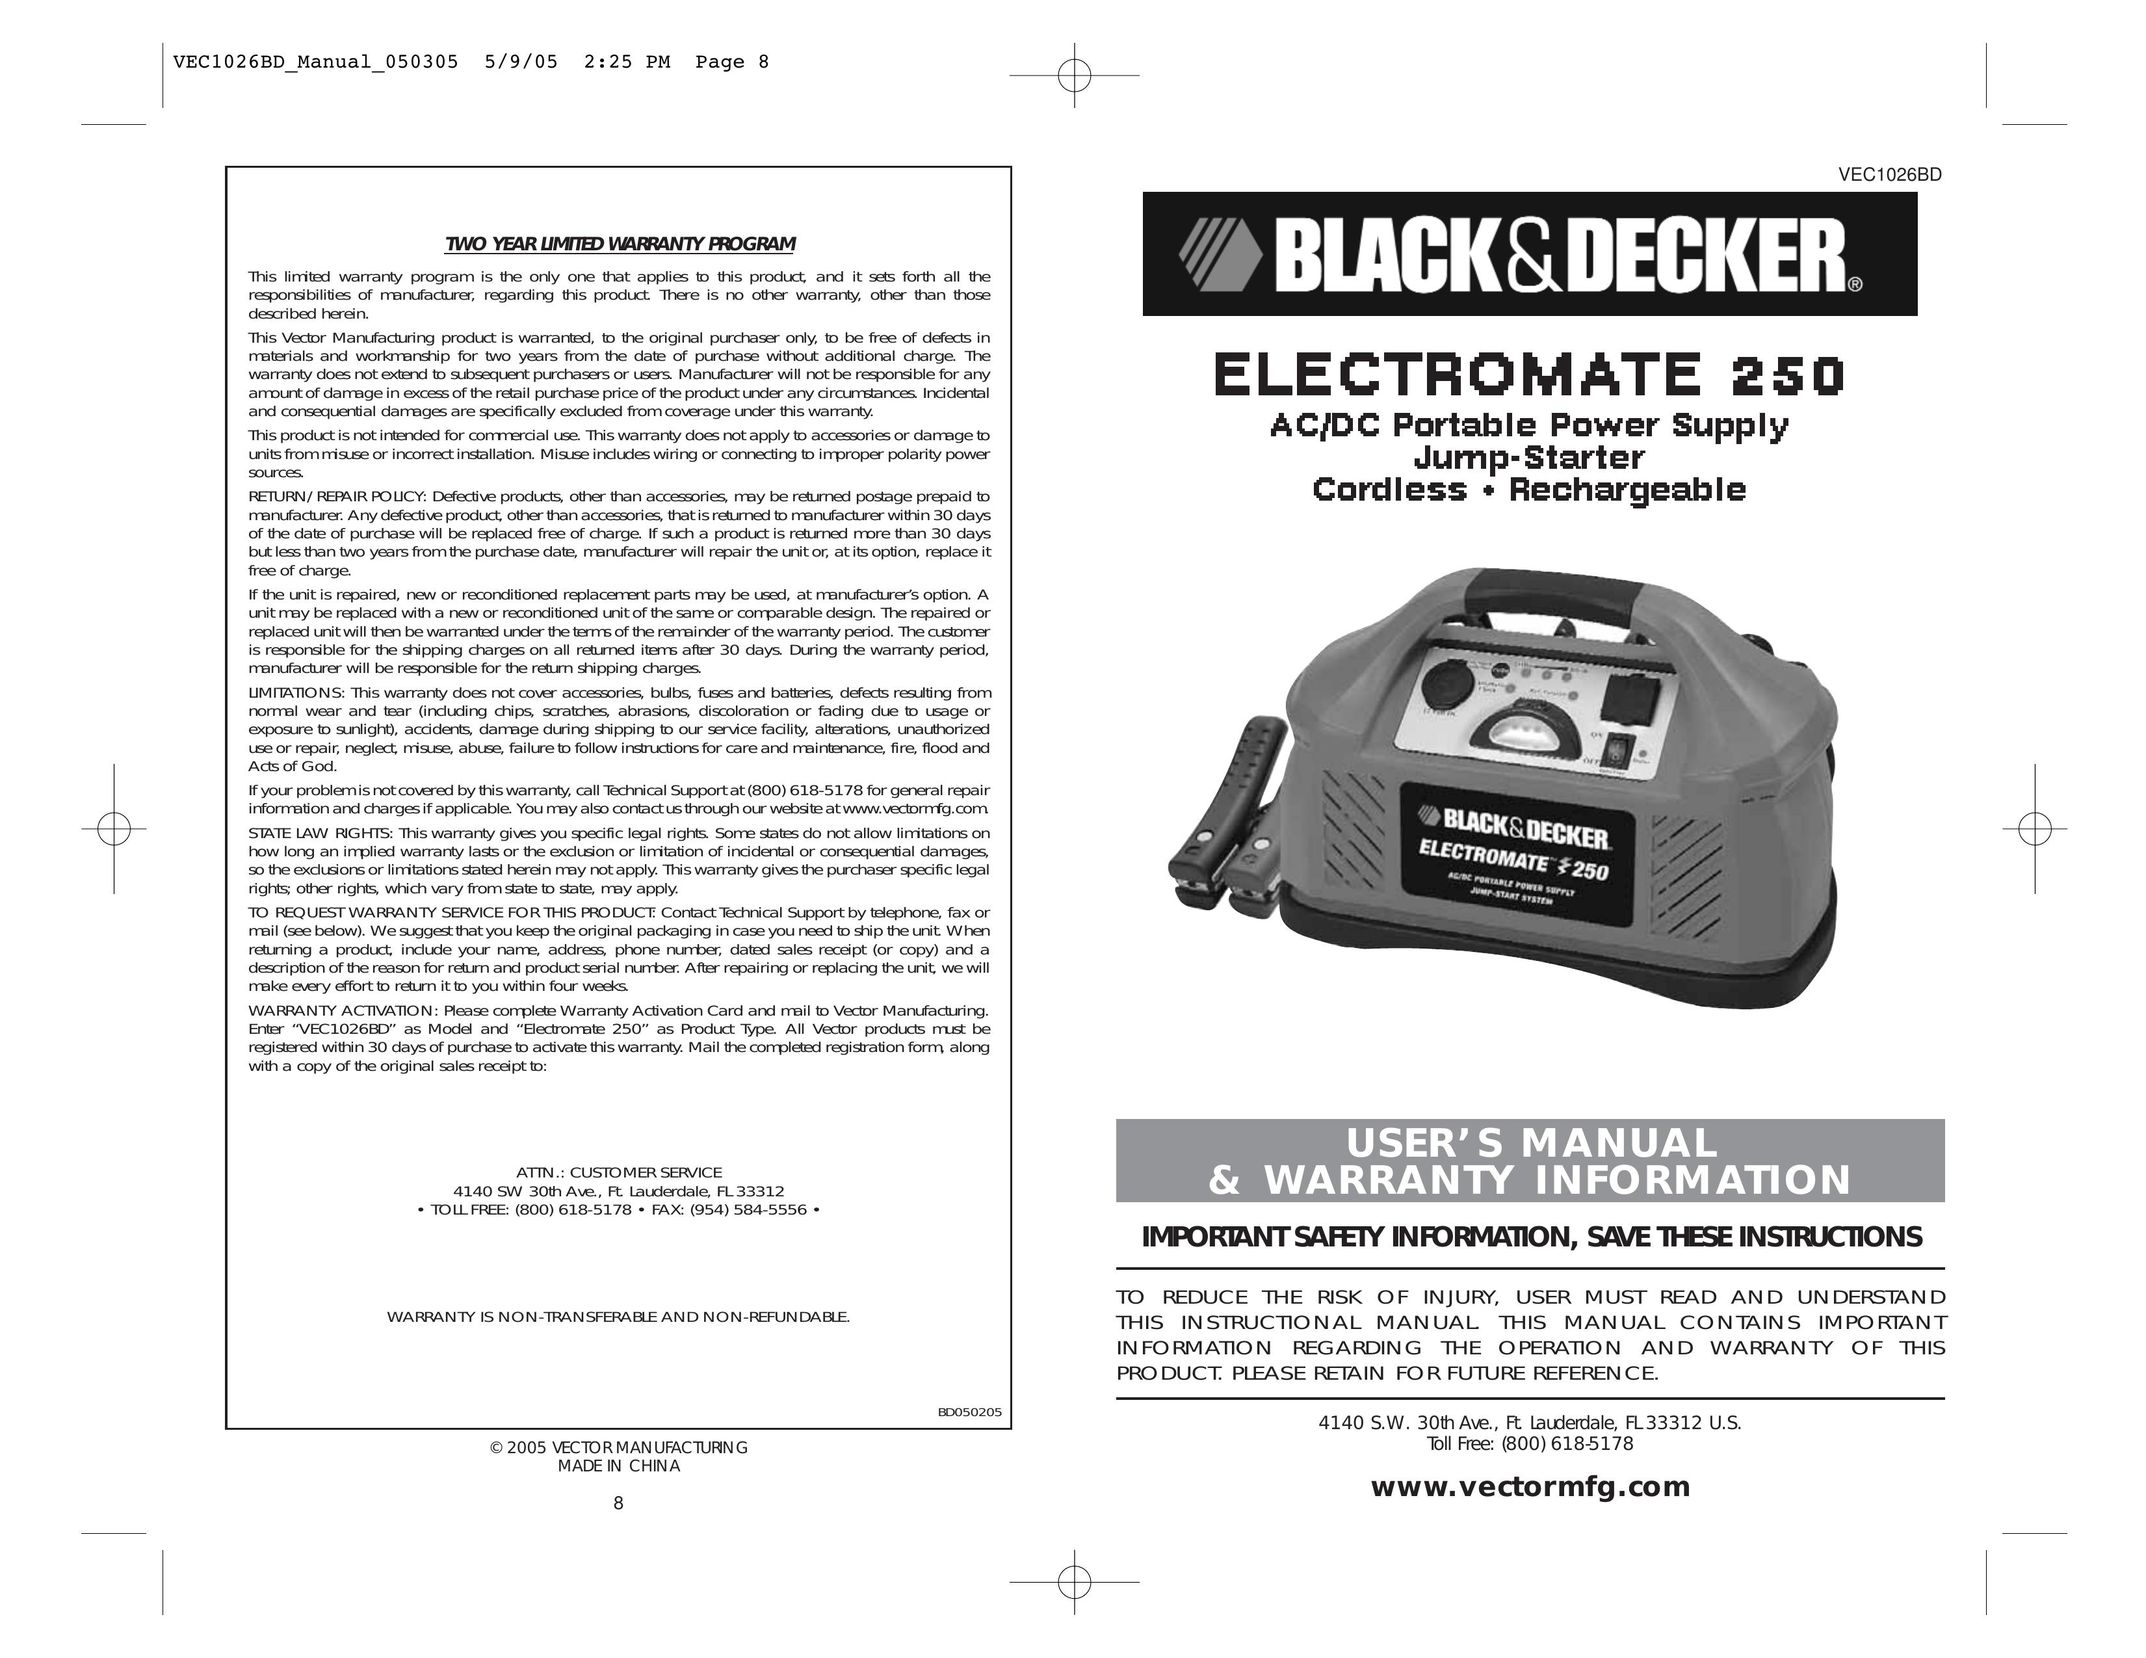 Vector VEC1026BD Power Supply User Manual